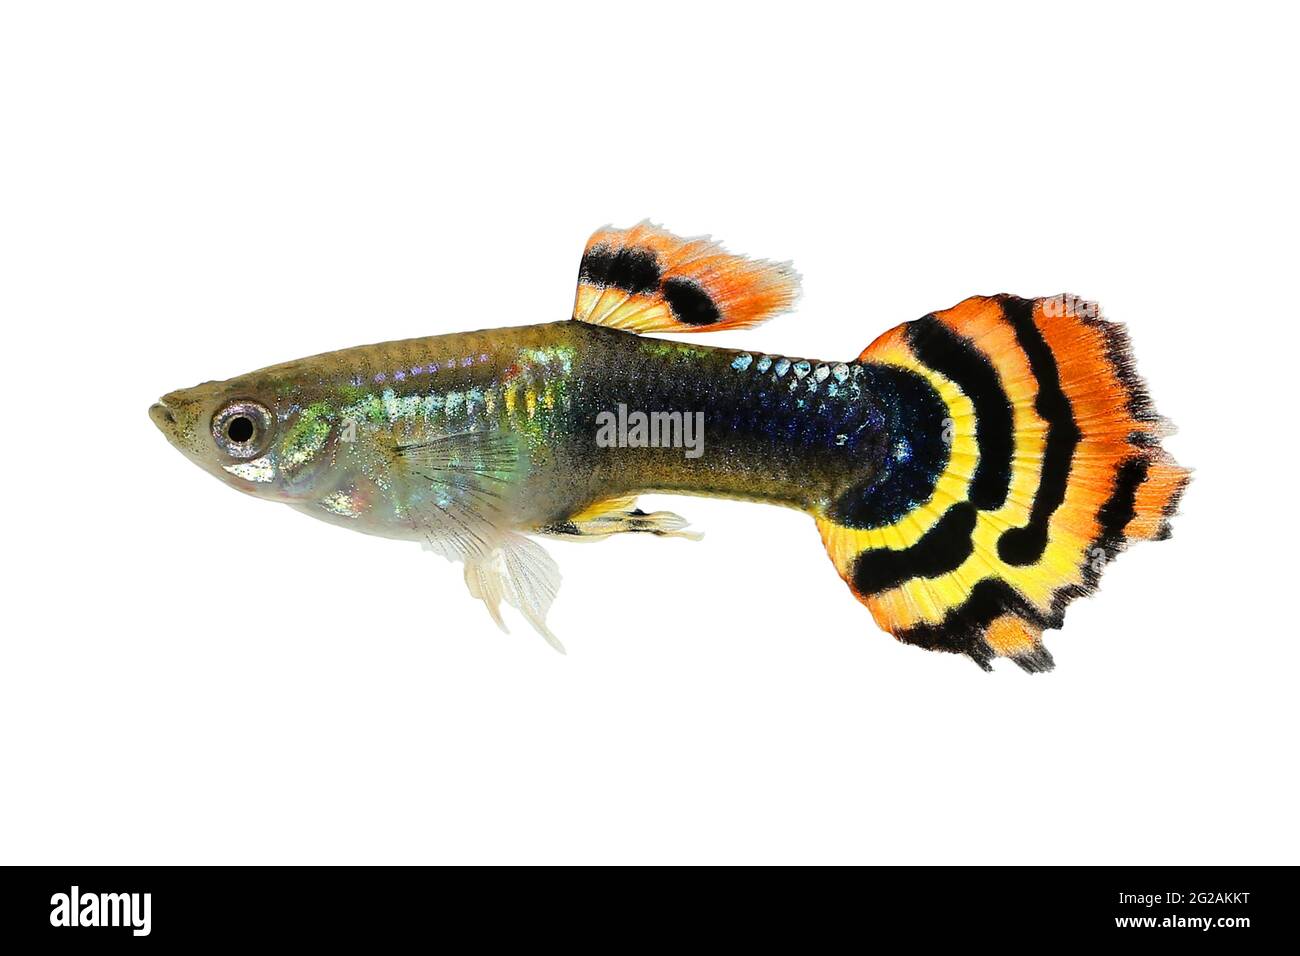 https://c8.alamy.com/comp/2G2AKKT/guppy-dragon-head-guppy-fish-aquarium-fish-poecilia-reticulata-colorful-freshwater-fish-2G2AKKT.jpg